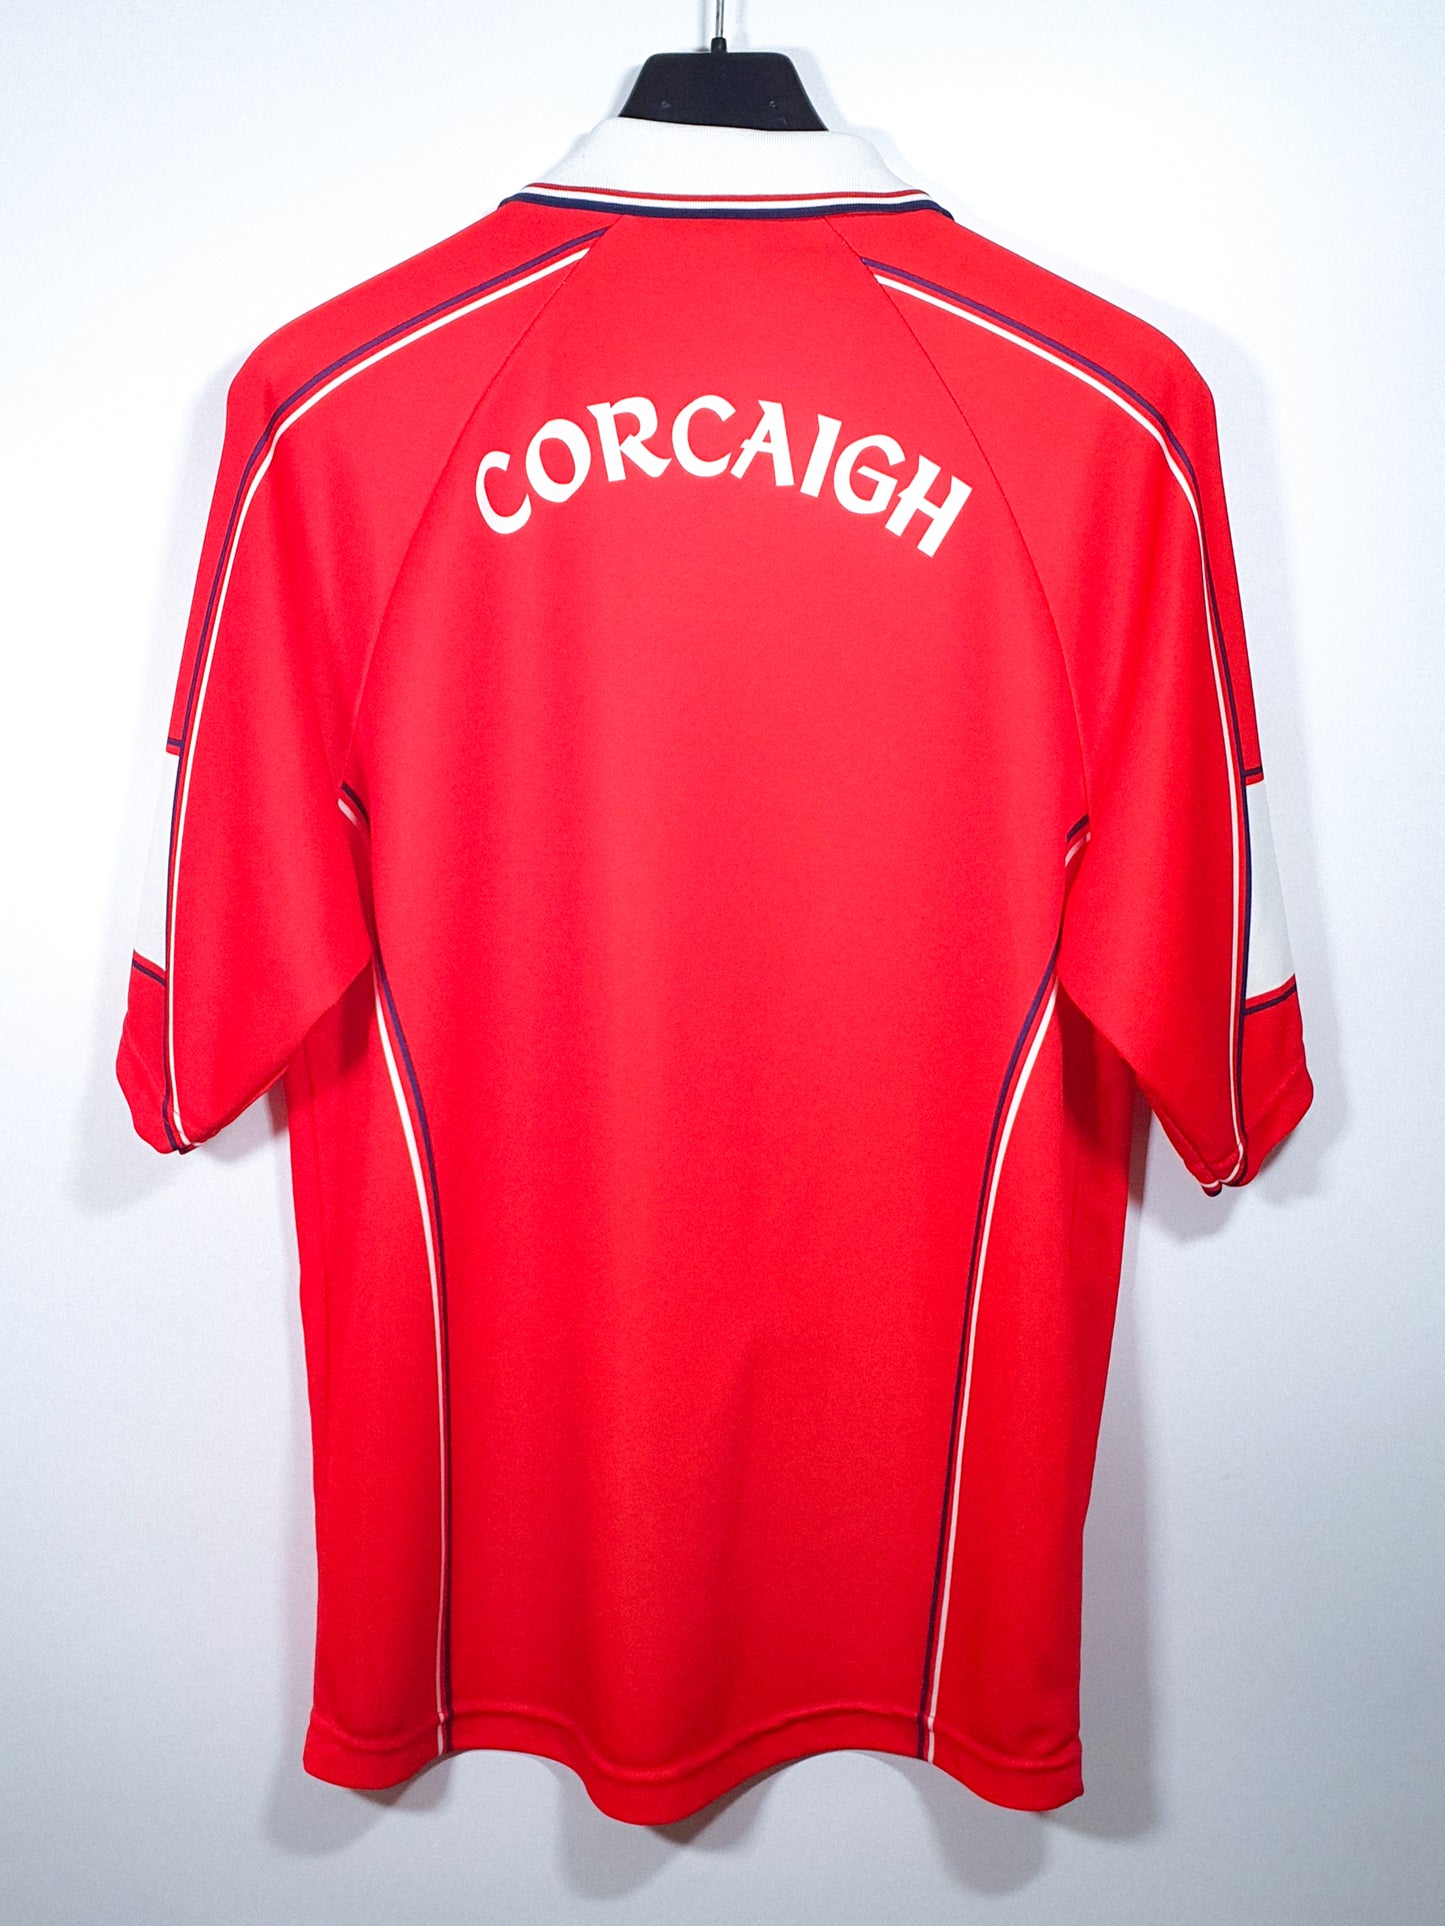 Cork 2002 (M)